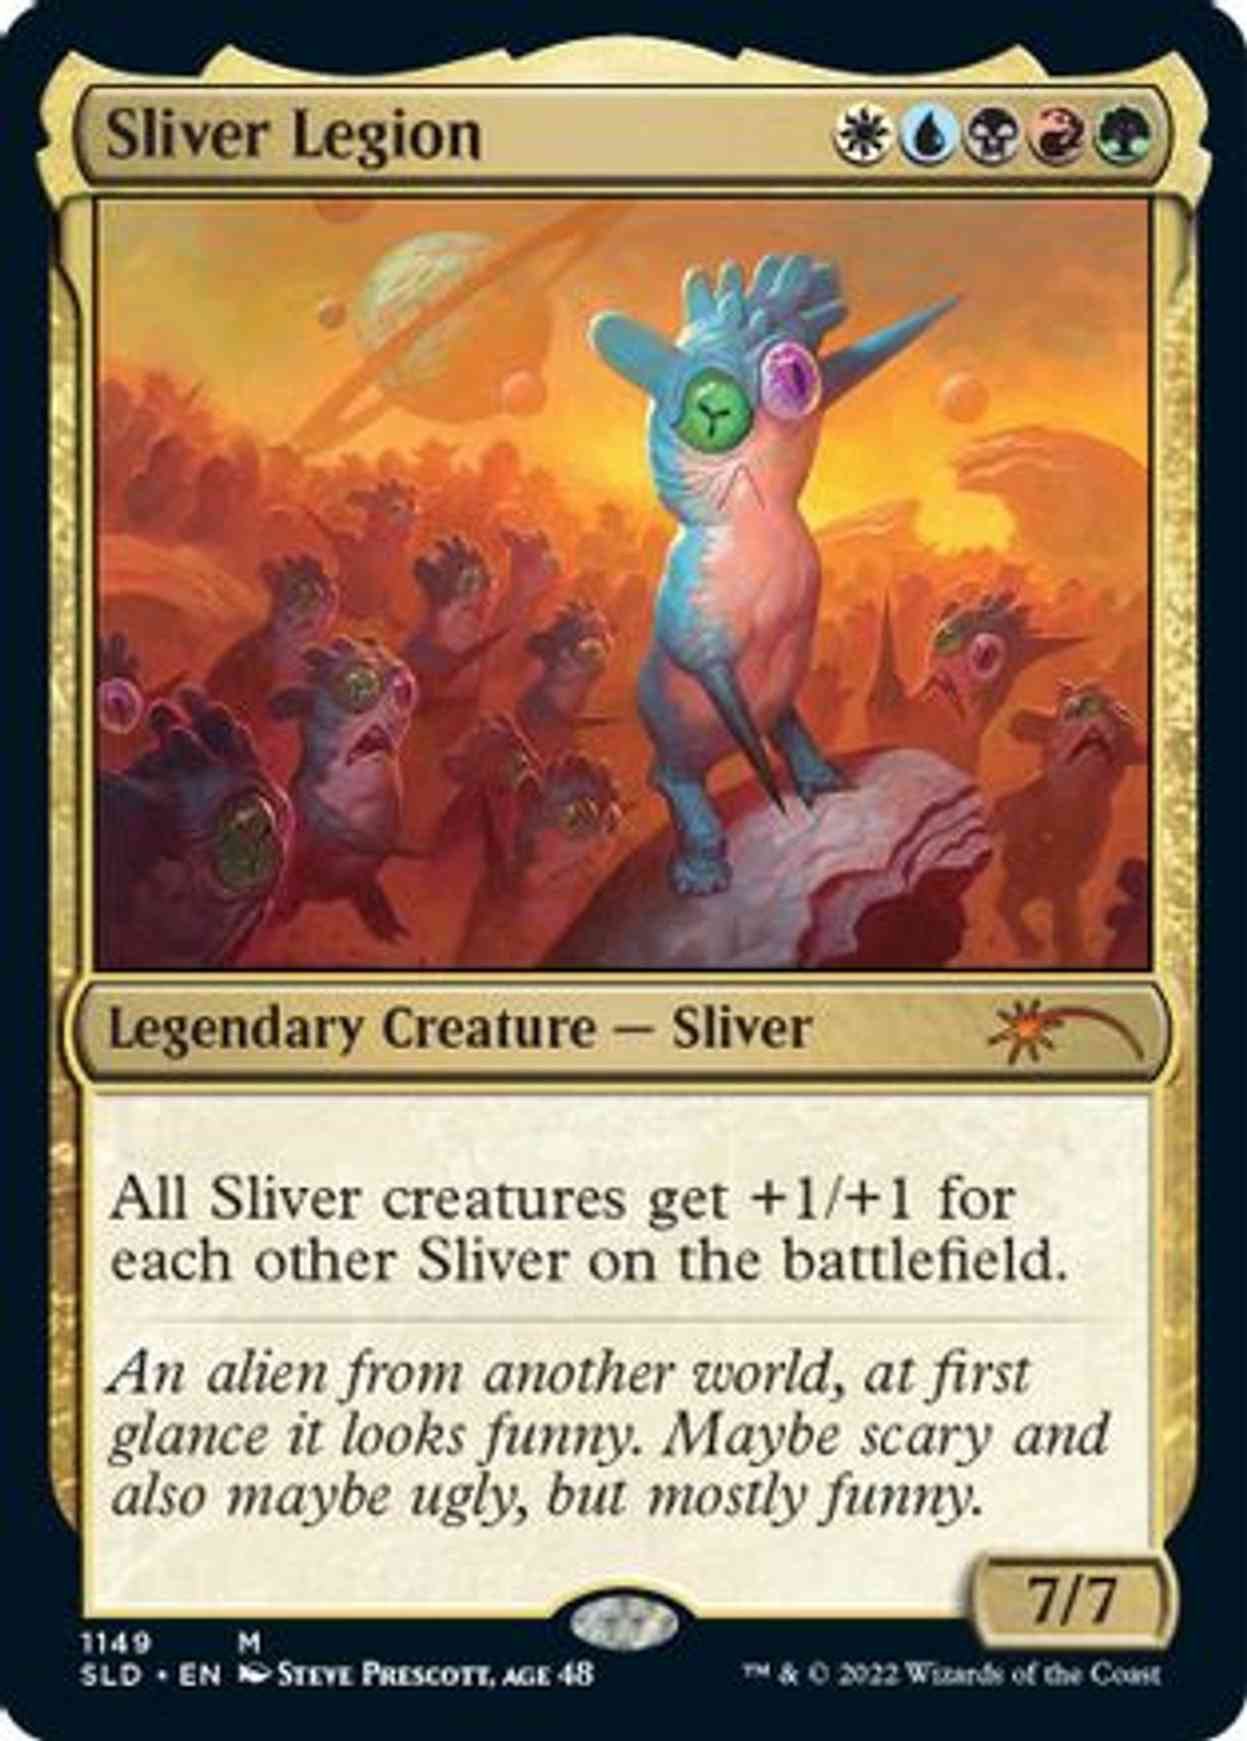 Sliver Legion (1149) magic card front